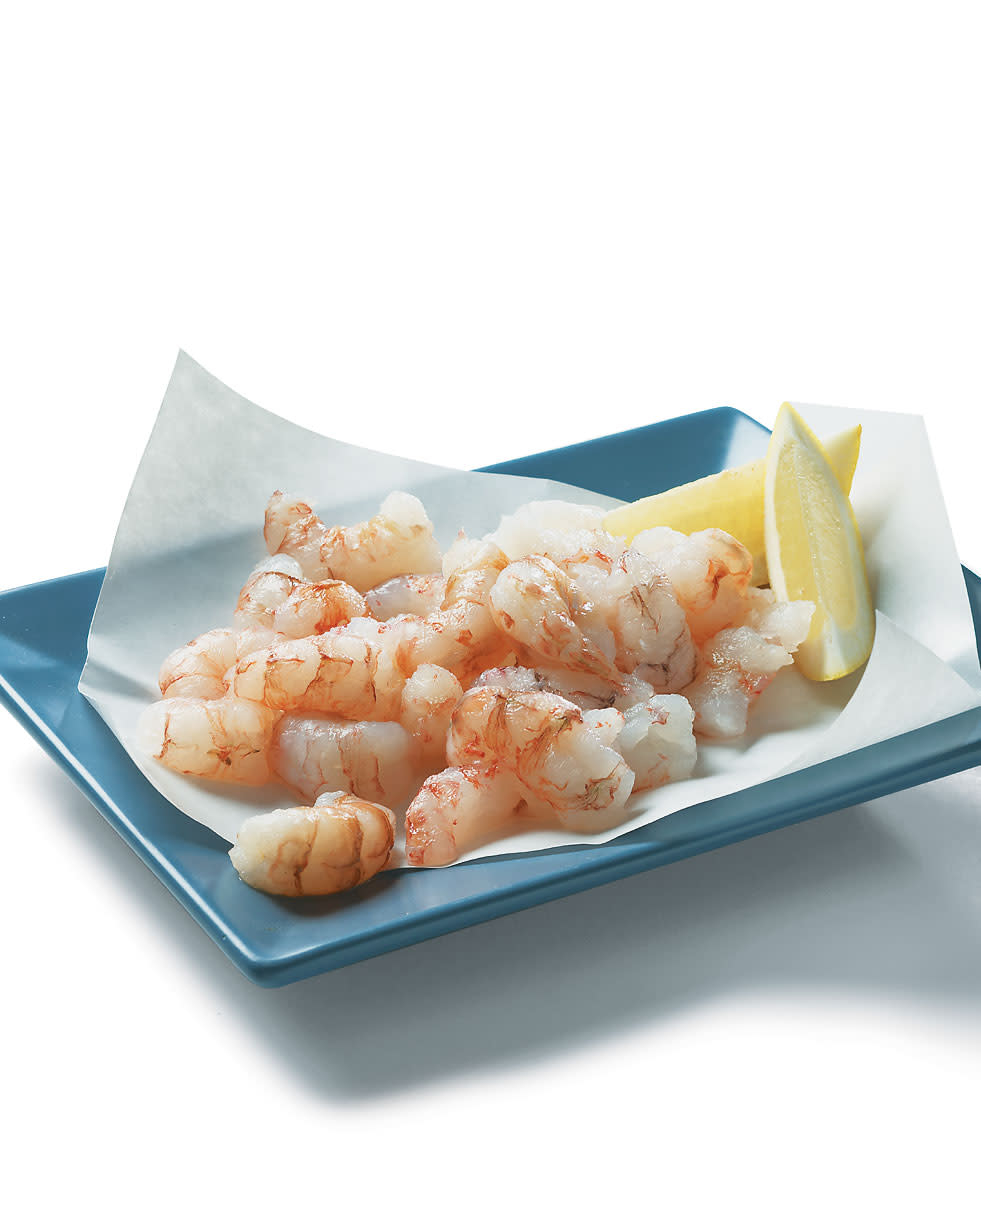 How is rock shrimp different from regular shrimp?